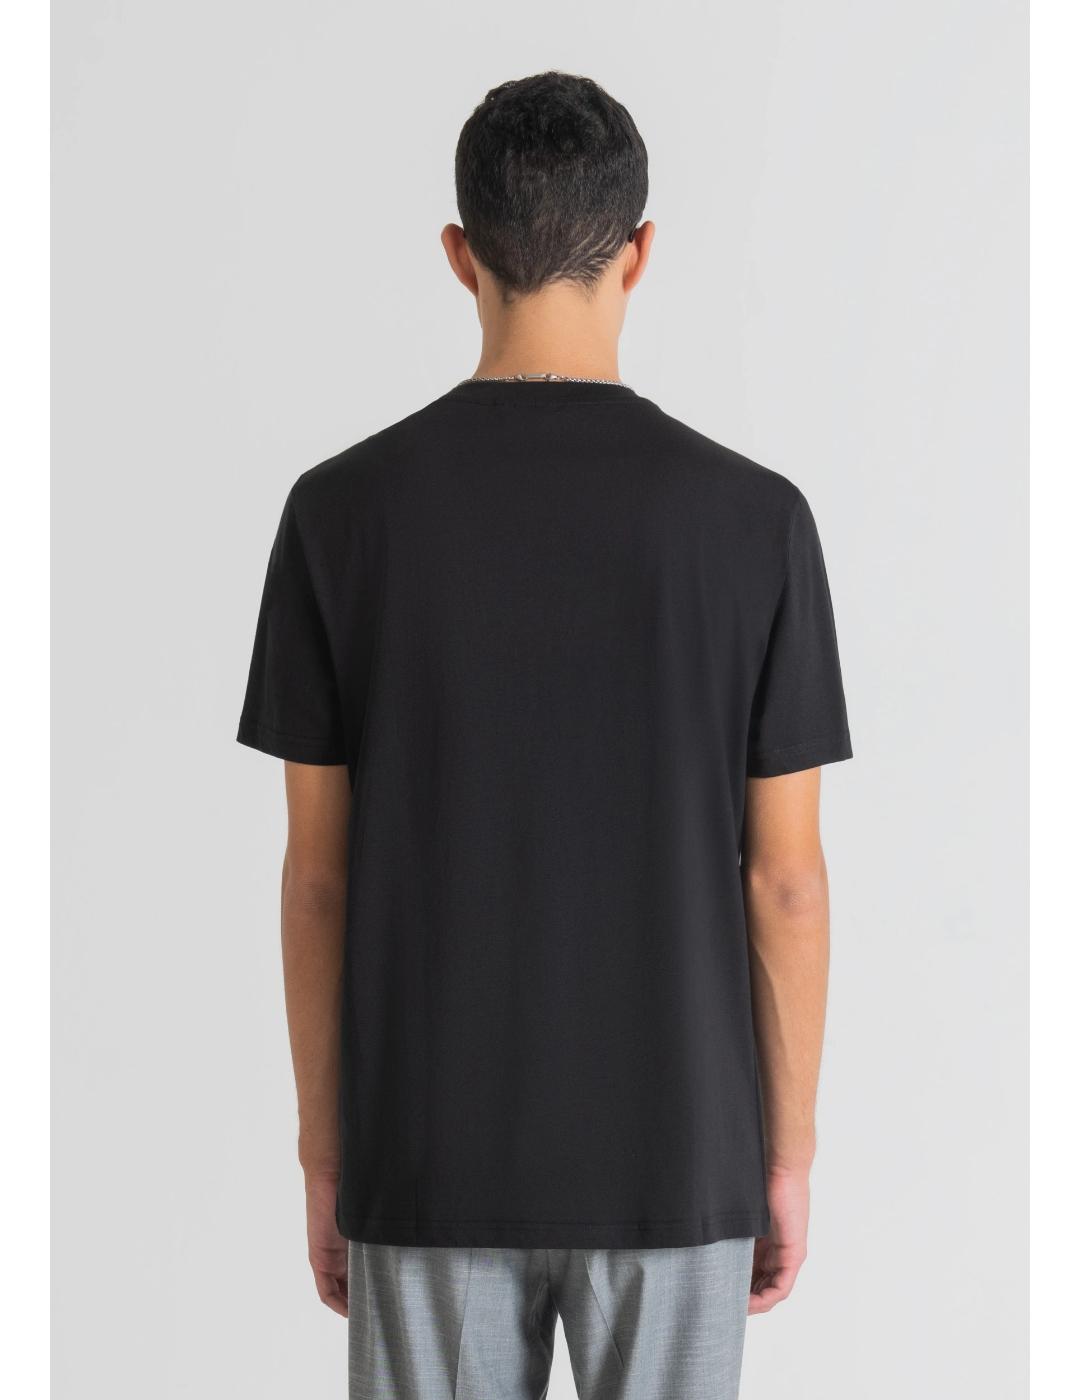 Camiseta Antony Morato basica negra para hombre